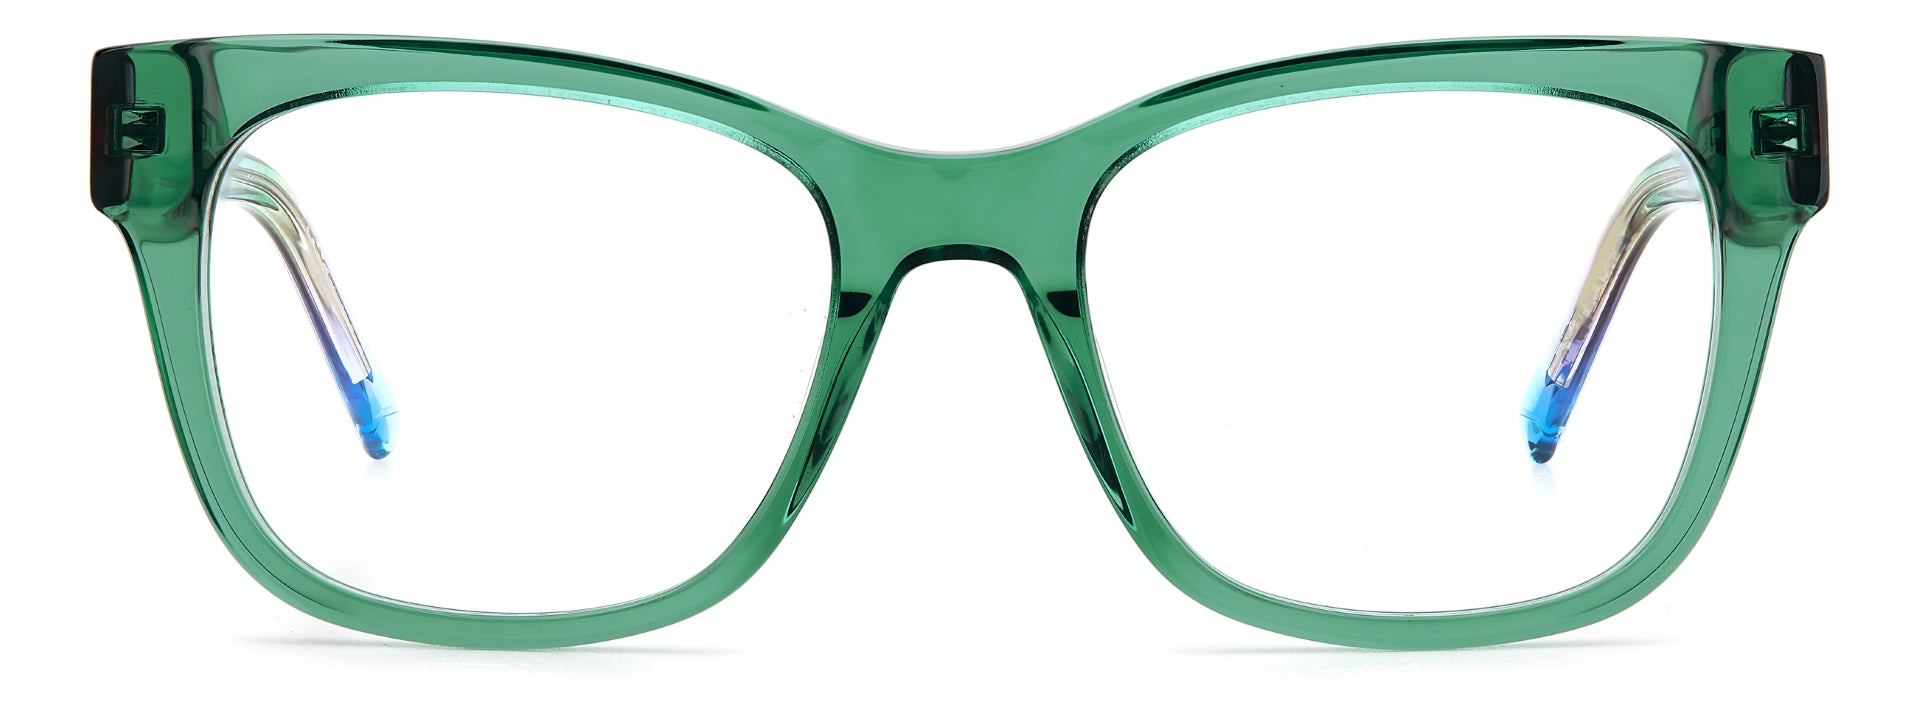 M MISSONI WOMAN SQUARE Eyeglasses-MMI 0128 Size 50